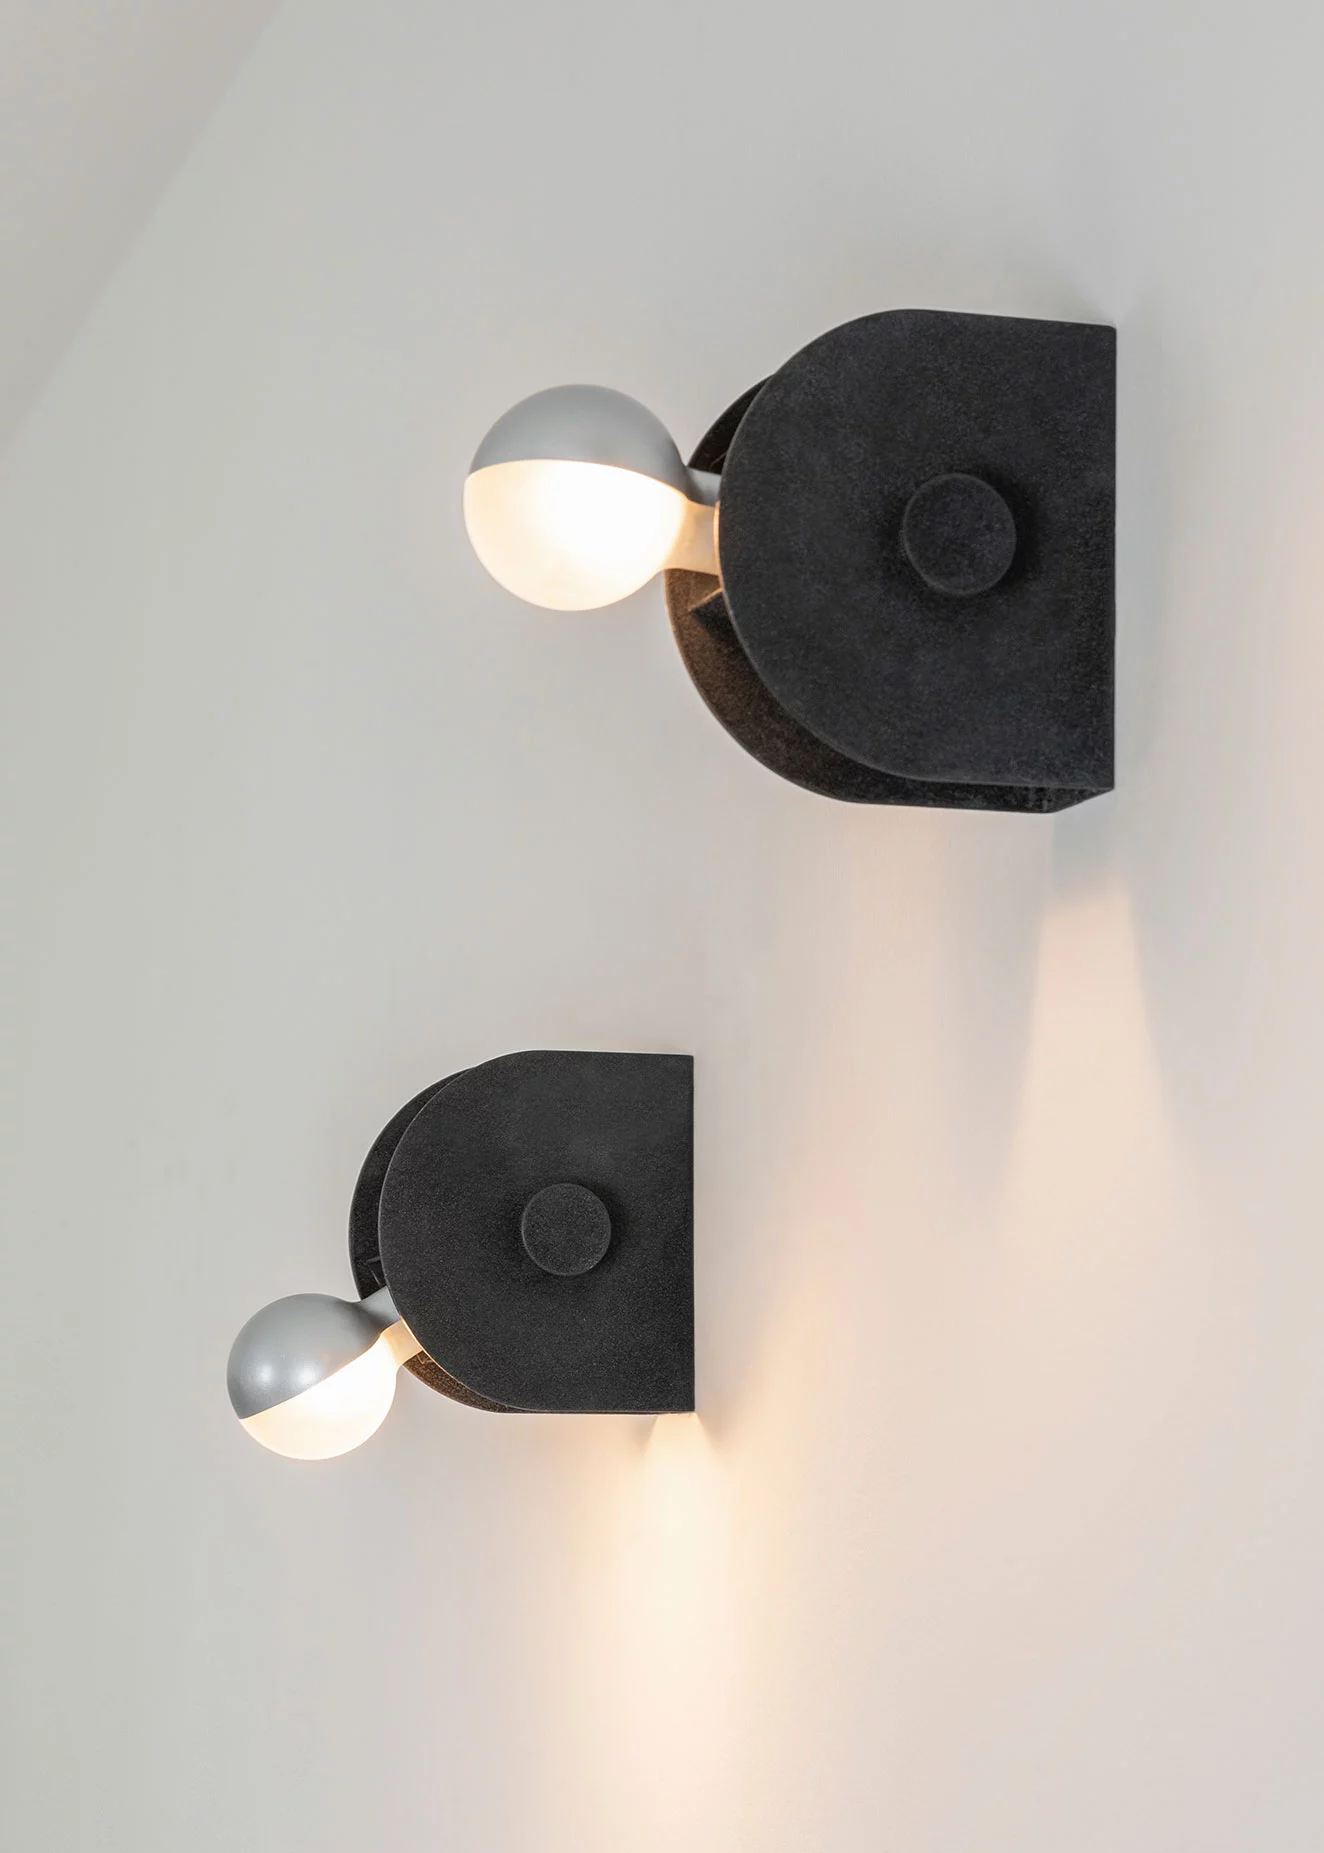 43 - Gino Sarfatti - Wall light - Galerie kreo